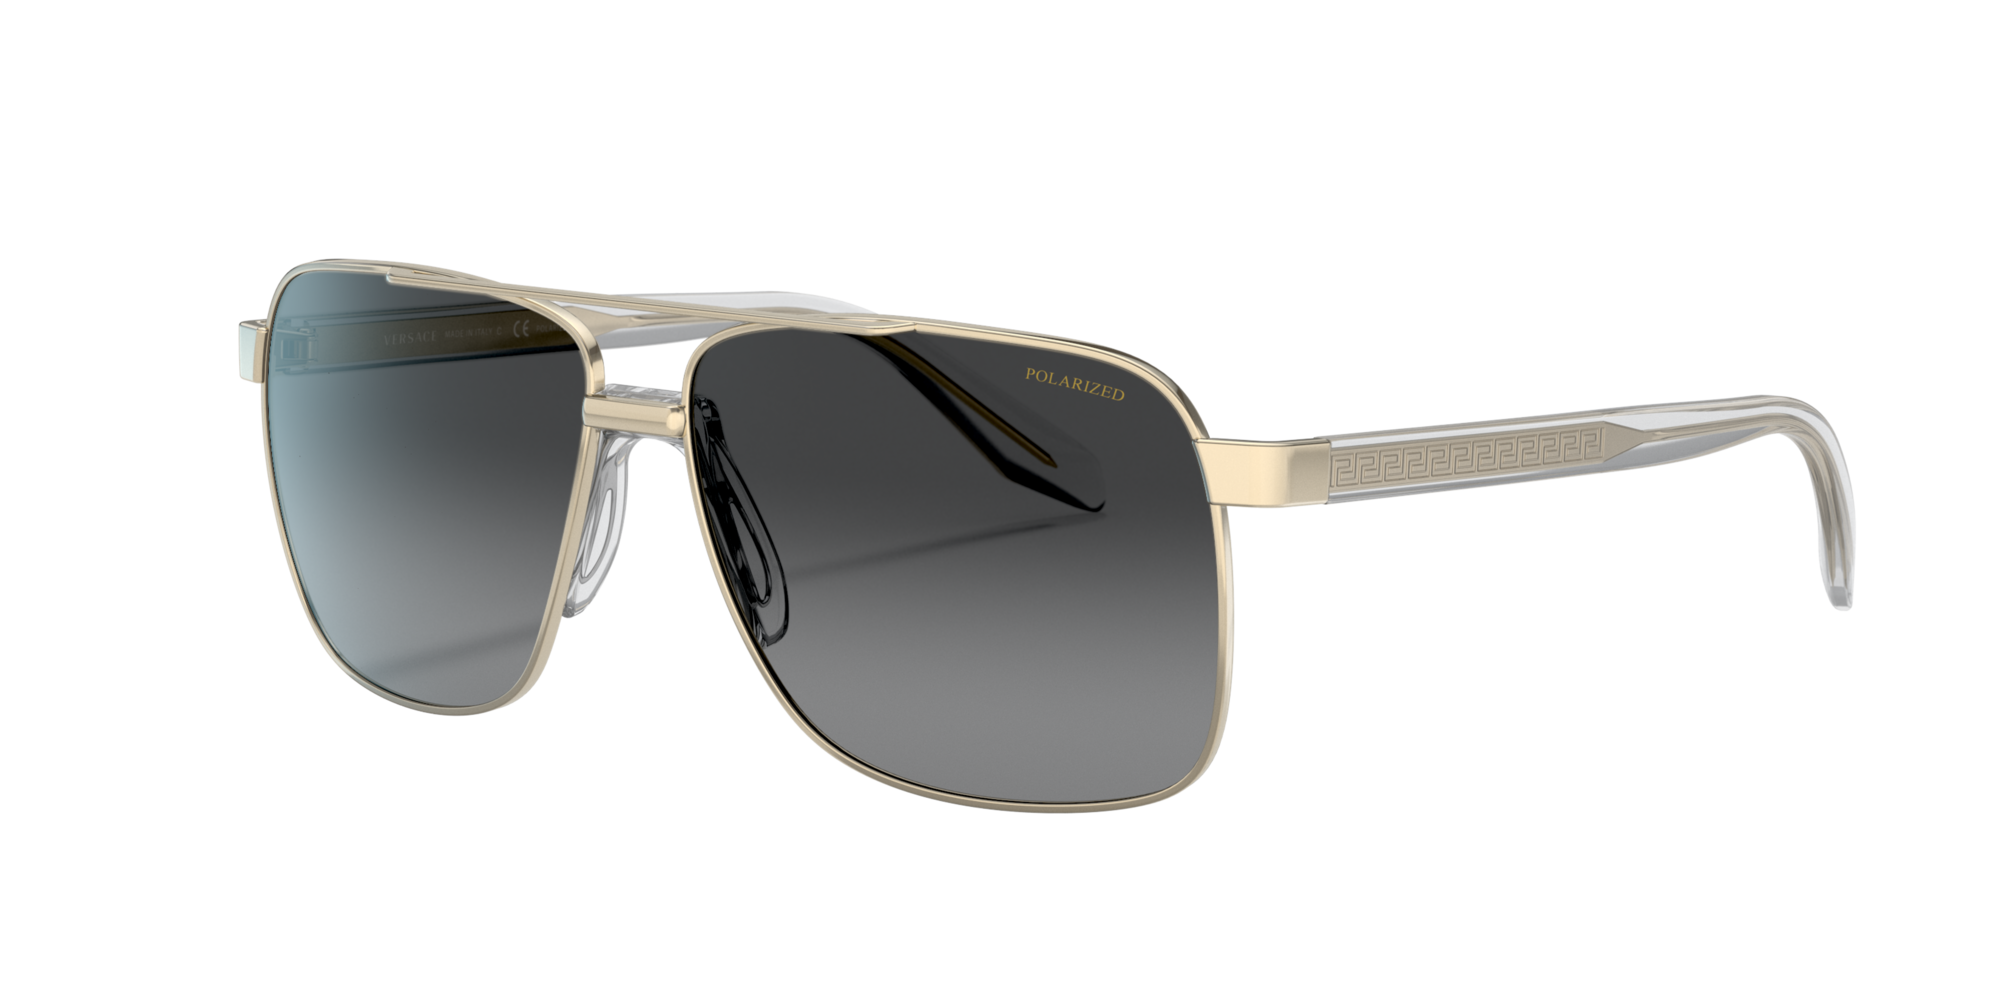 versace sunglasses model 2174